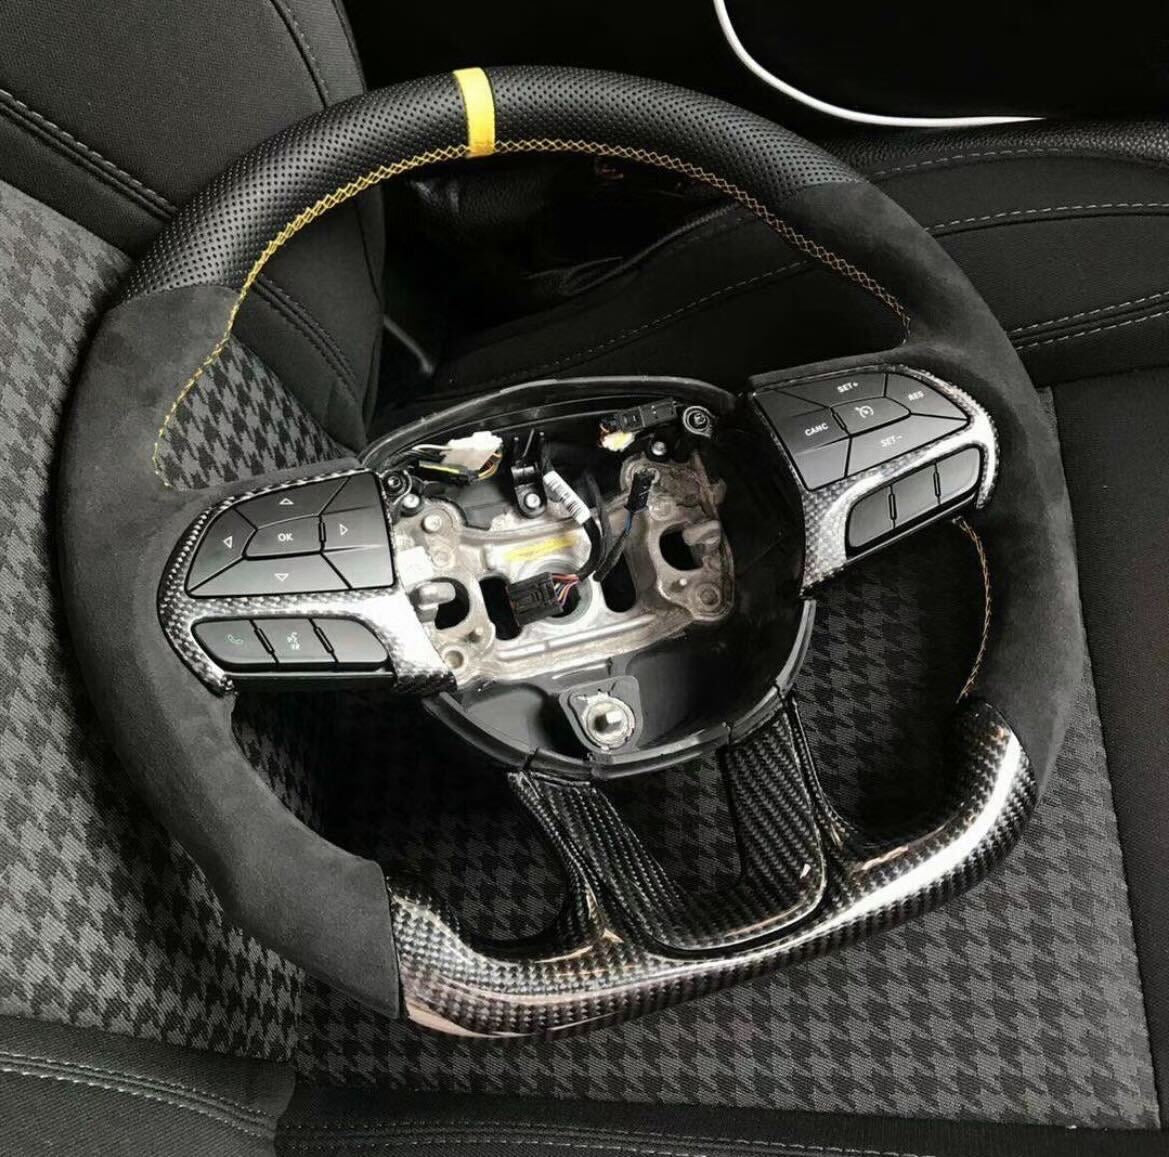 Dodge - Carbon Fiber Steering Wheel (Custom)